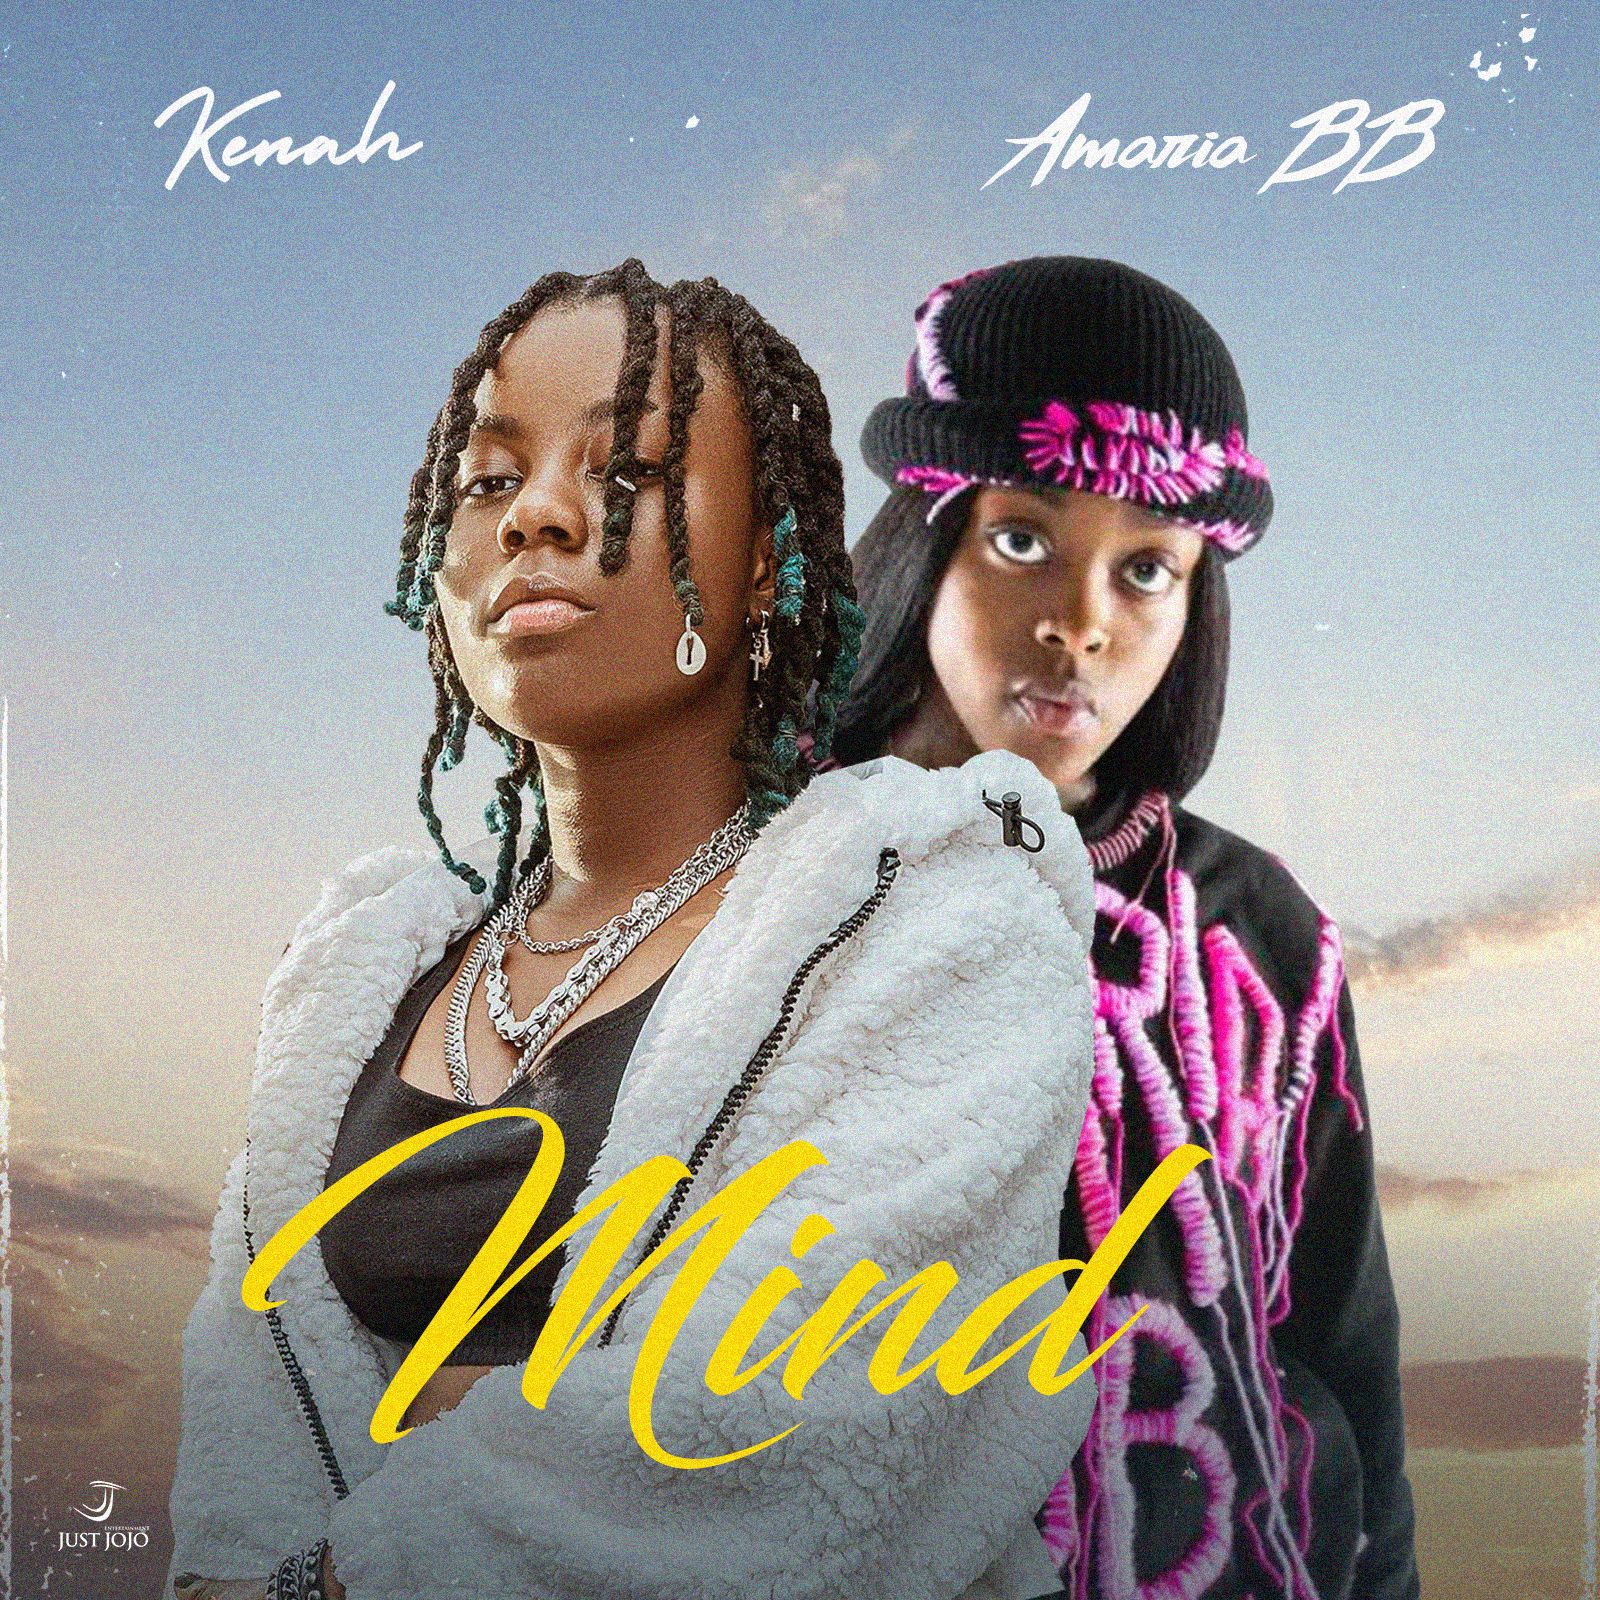 Kenah drops sensual new single ‘Mind’ featuring Amaria BB